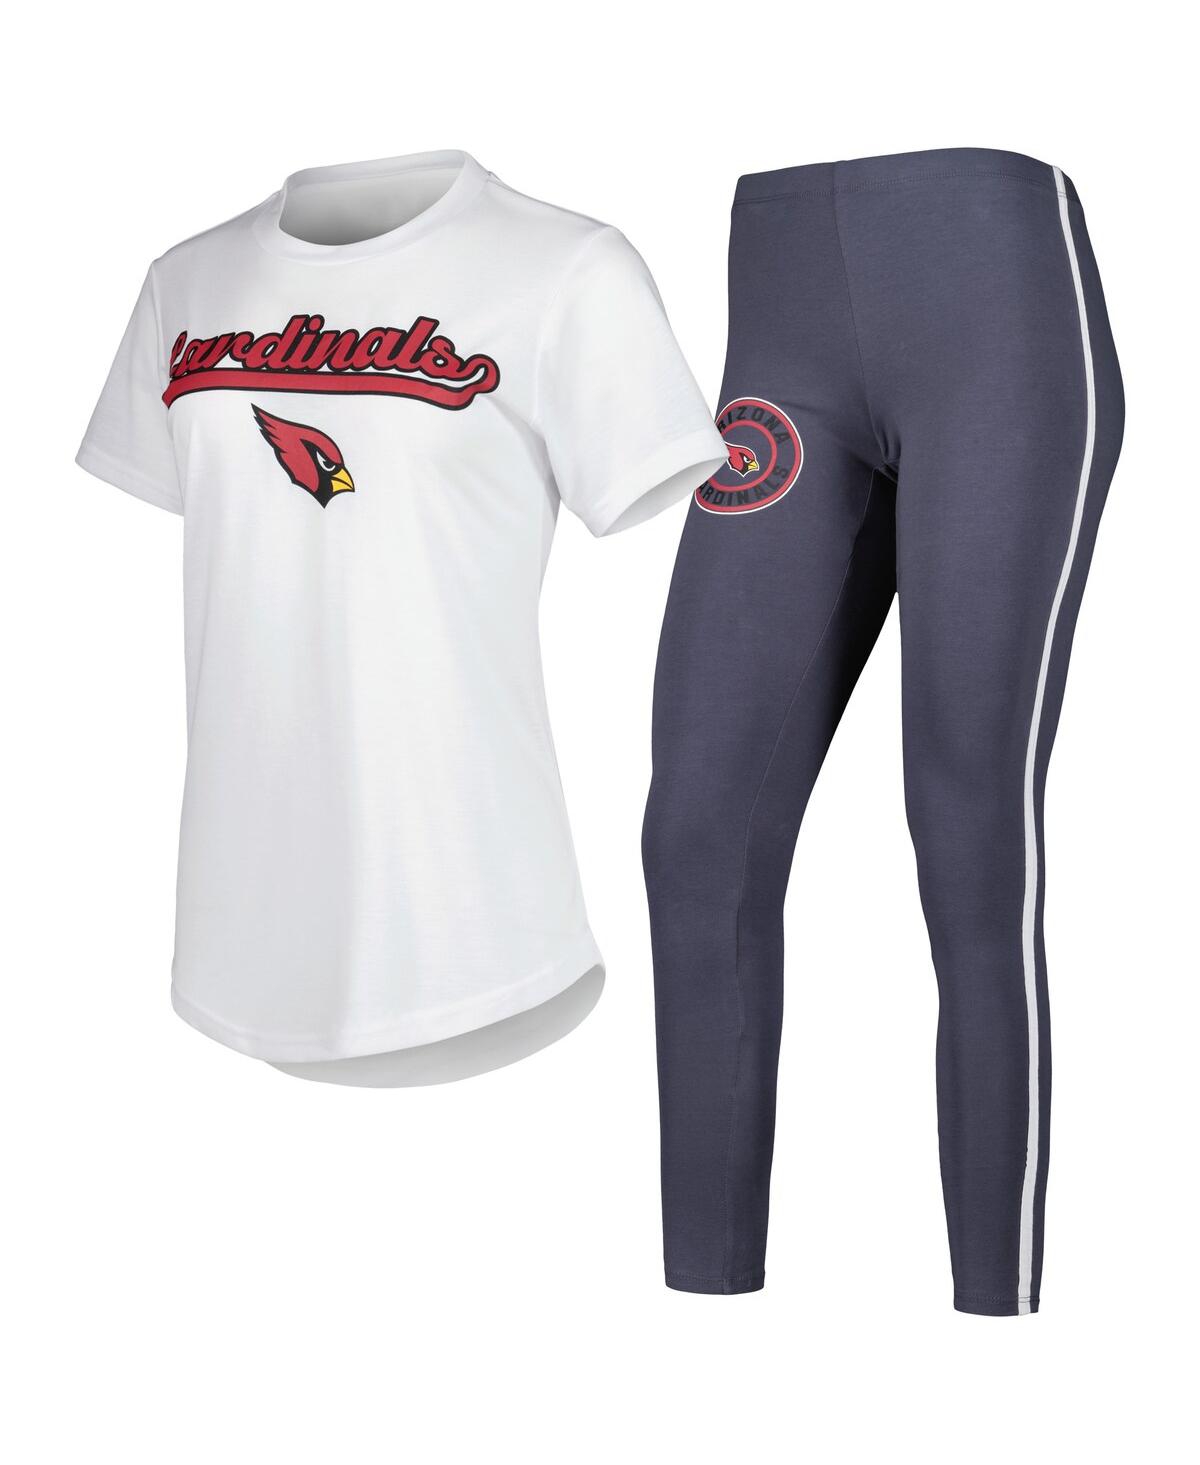 Women's Concepts Sport White, Charcoal Arizona Cardinals Sonata T-shirt and Leggings Sleep Set - White, Charcoal